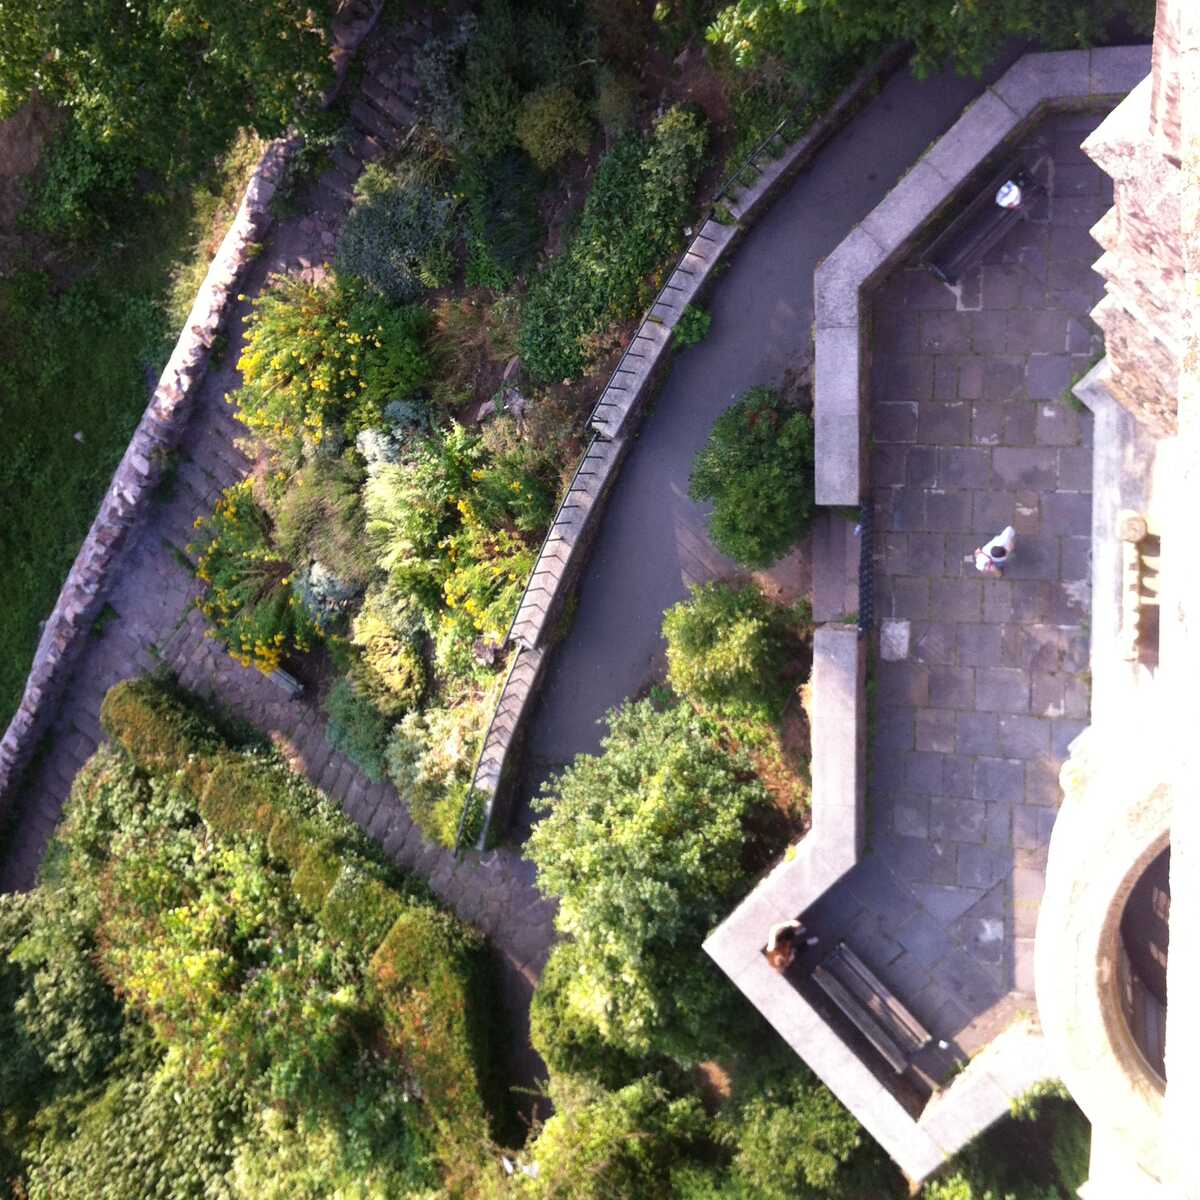 Looking down on pathways in an ornamental garden